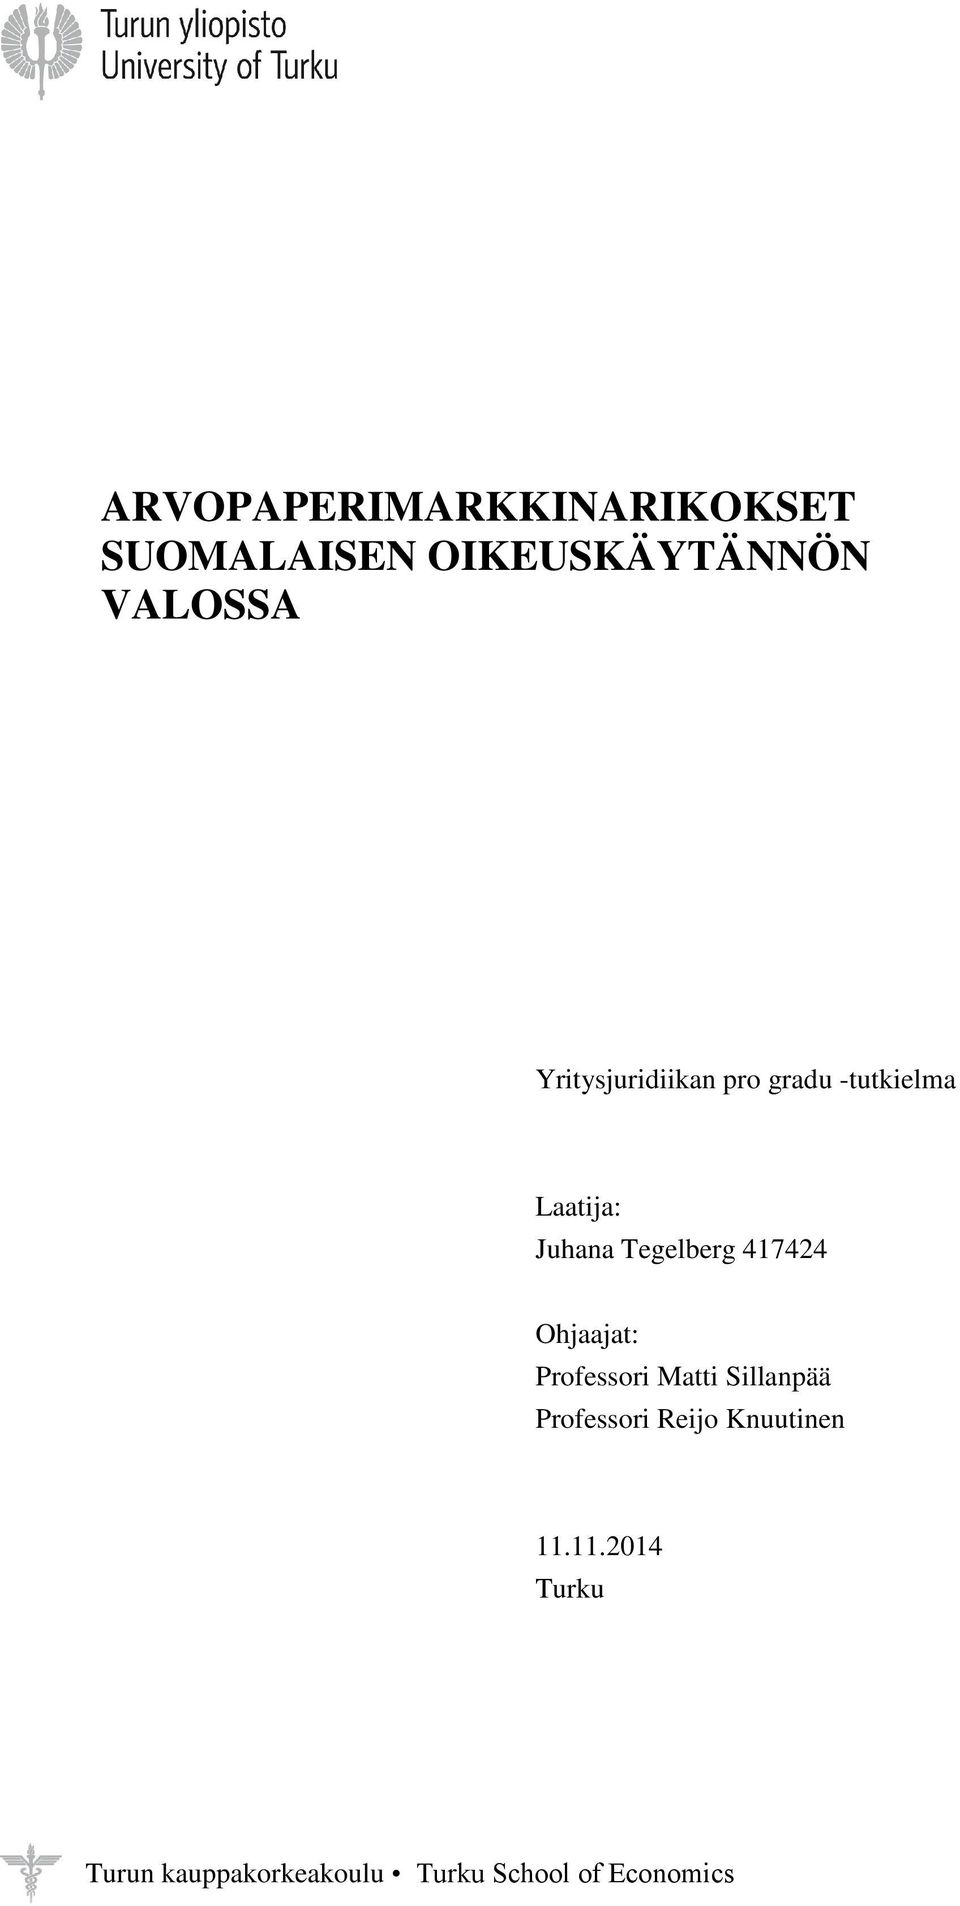 417424 Ohjaajat: Professori Matti Sillanpää Professori Reijo